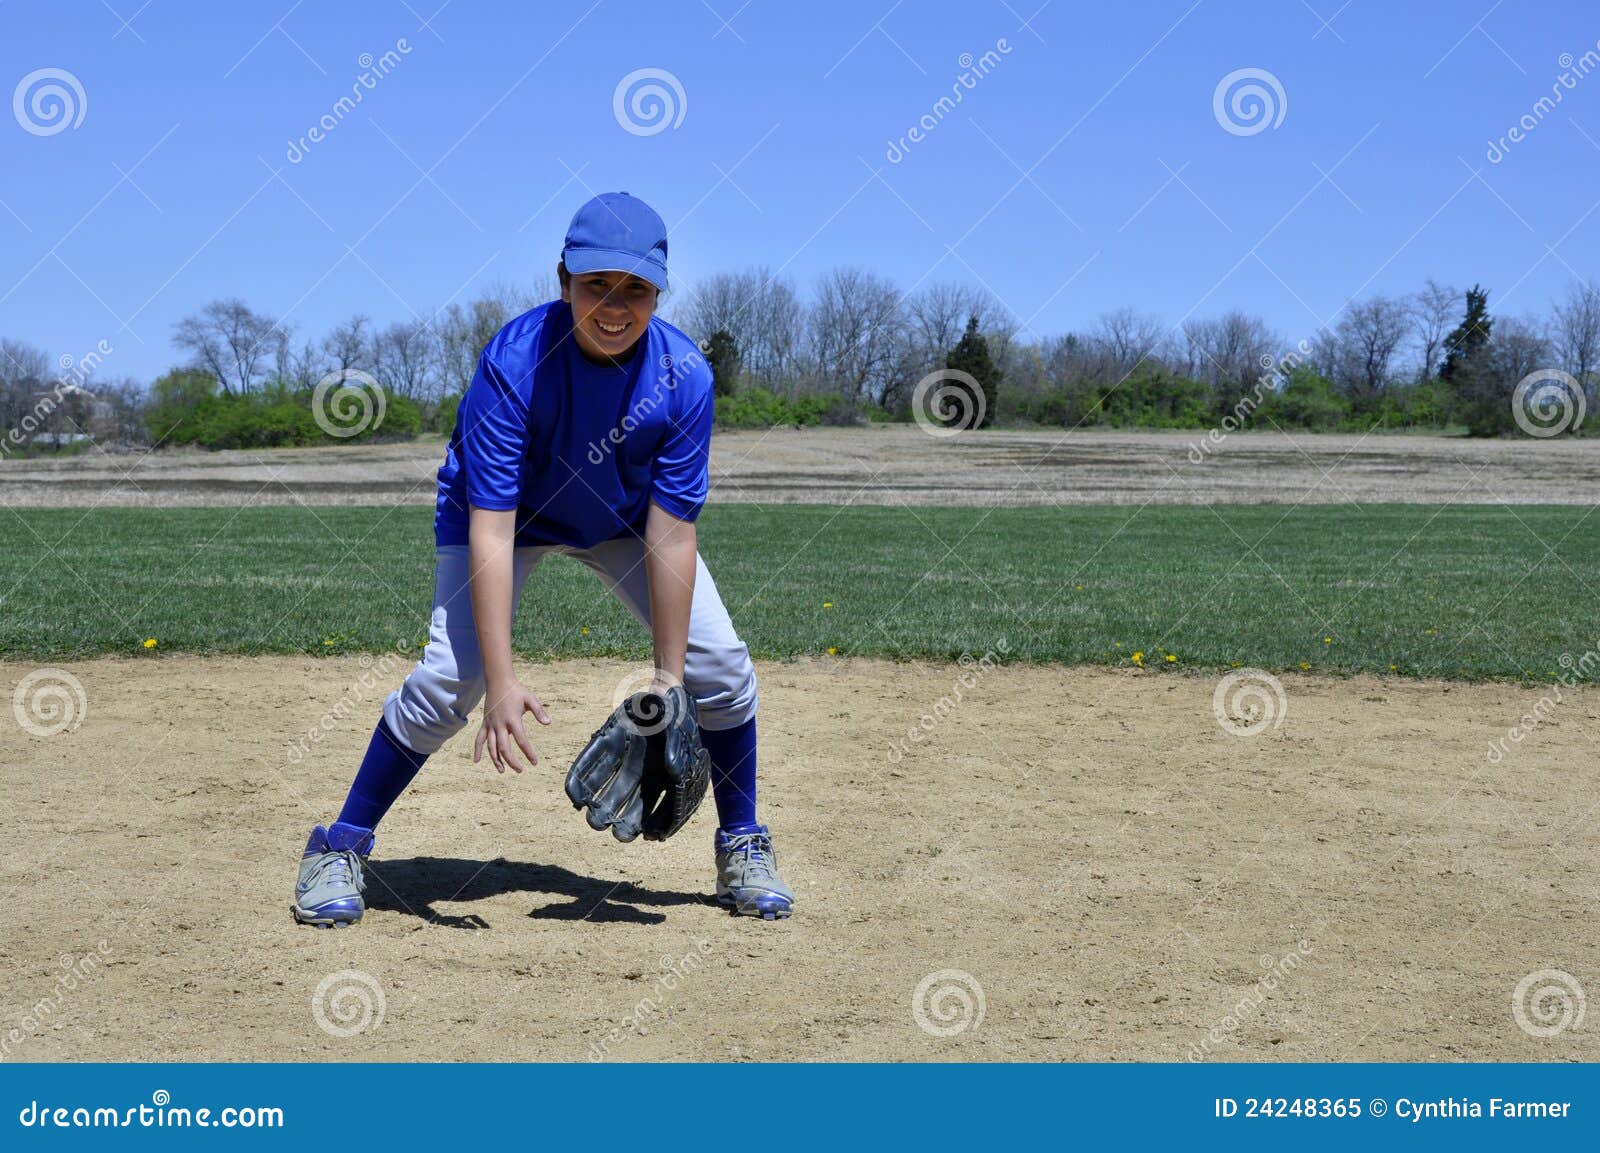 young infield baseball player